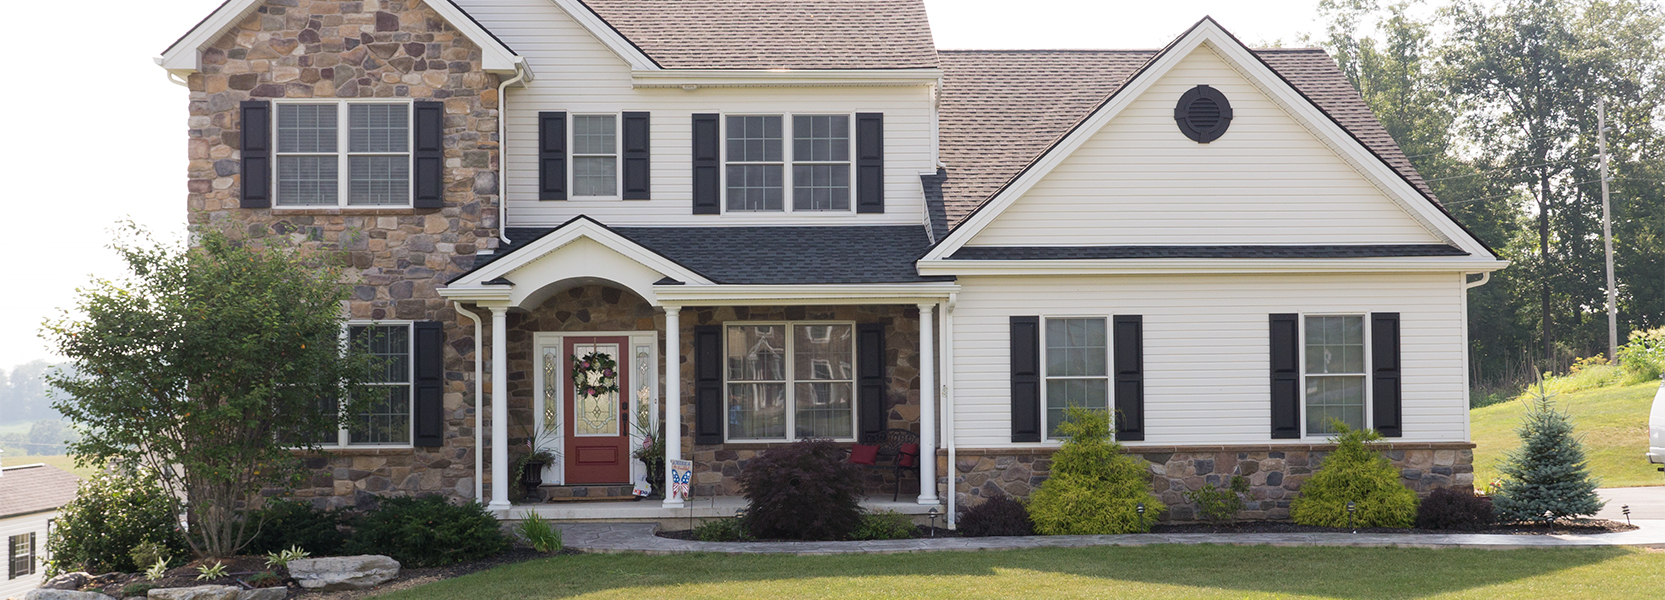 R & K Custom Homes Builders of the Lehigh Valley - Energy-Efficient Custom Home